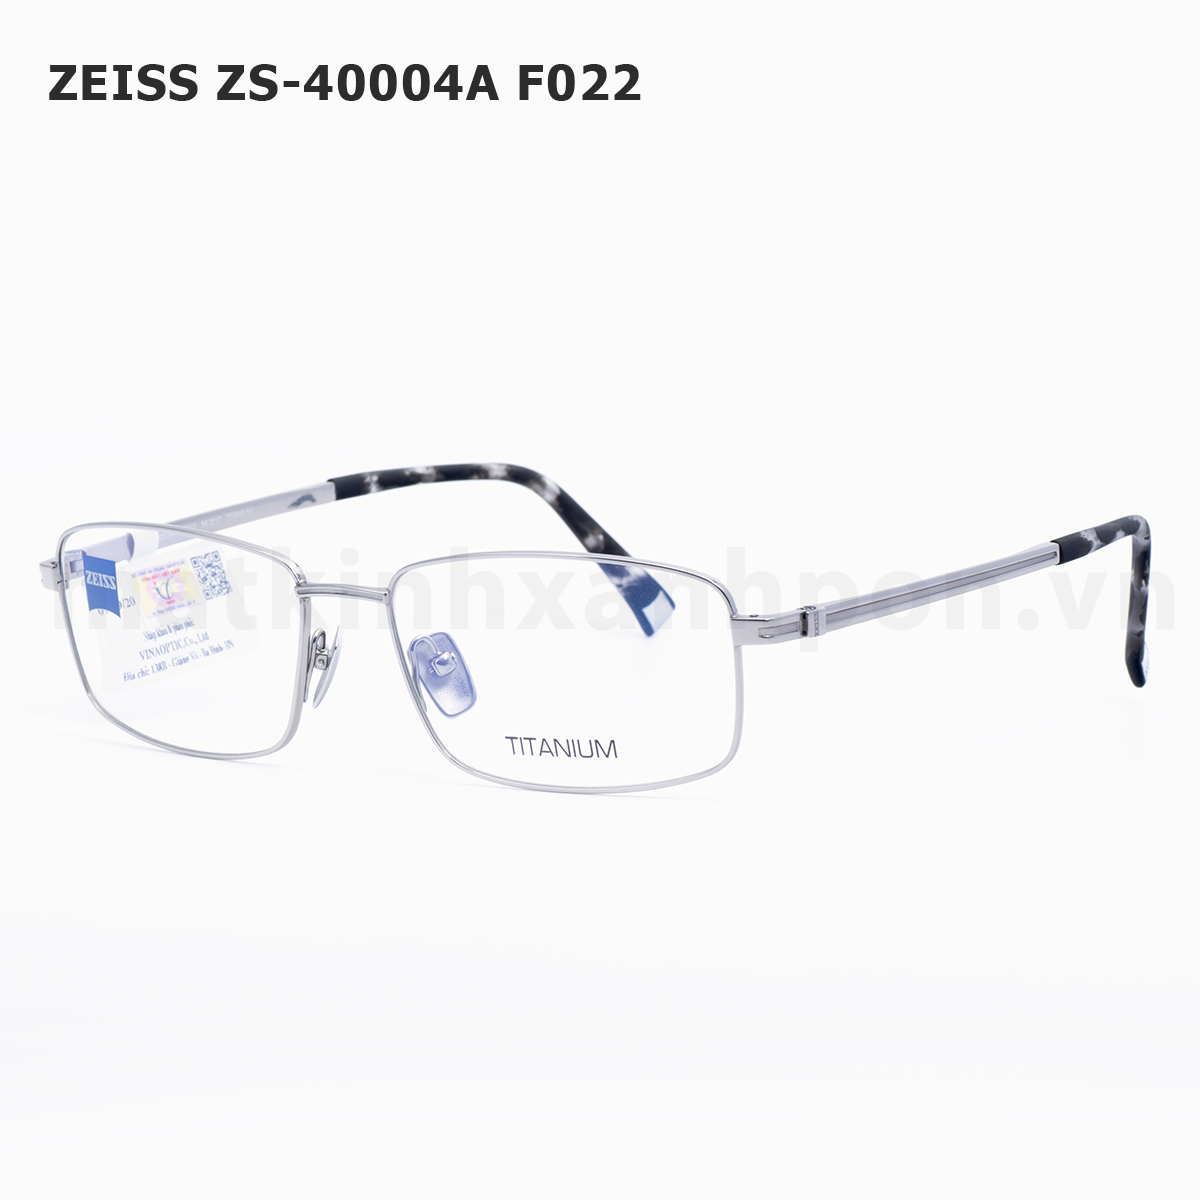 Zeiss ZS-40004A F022